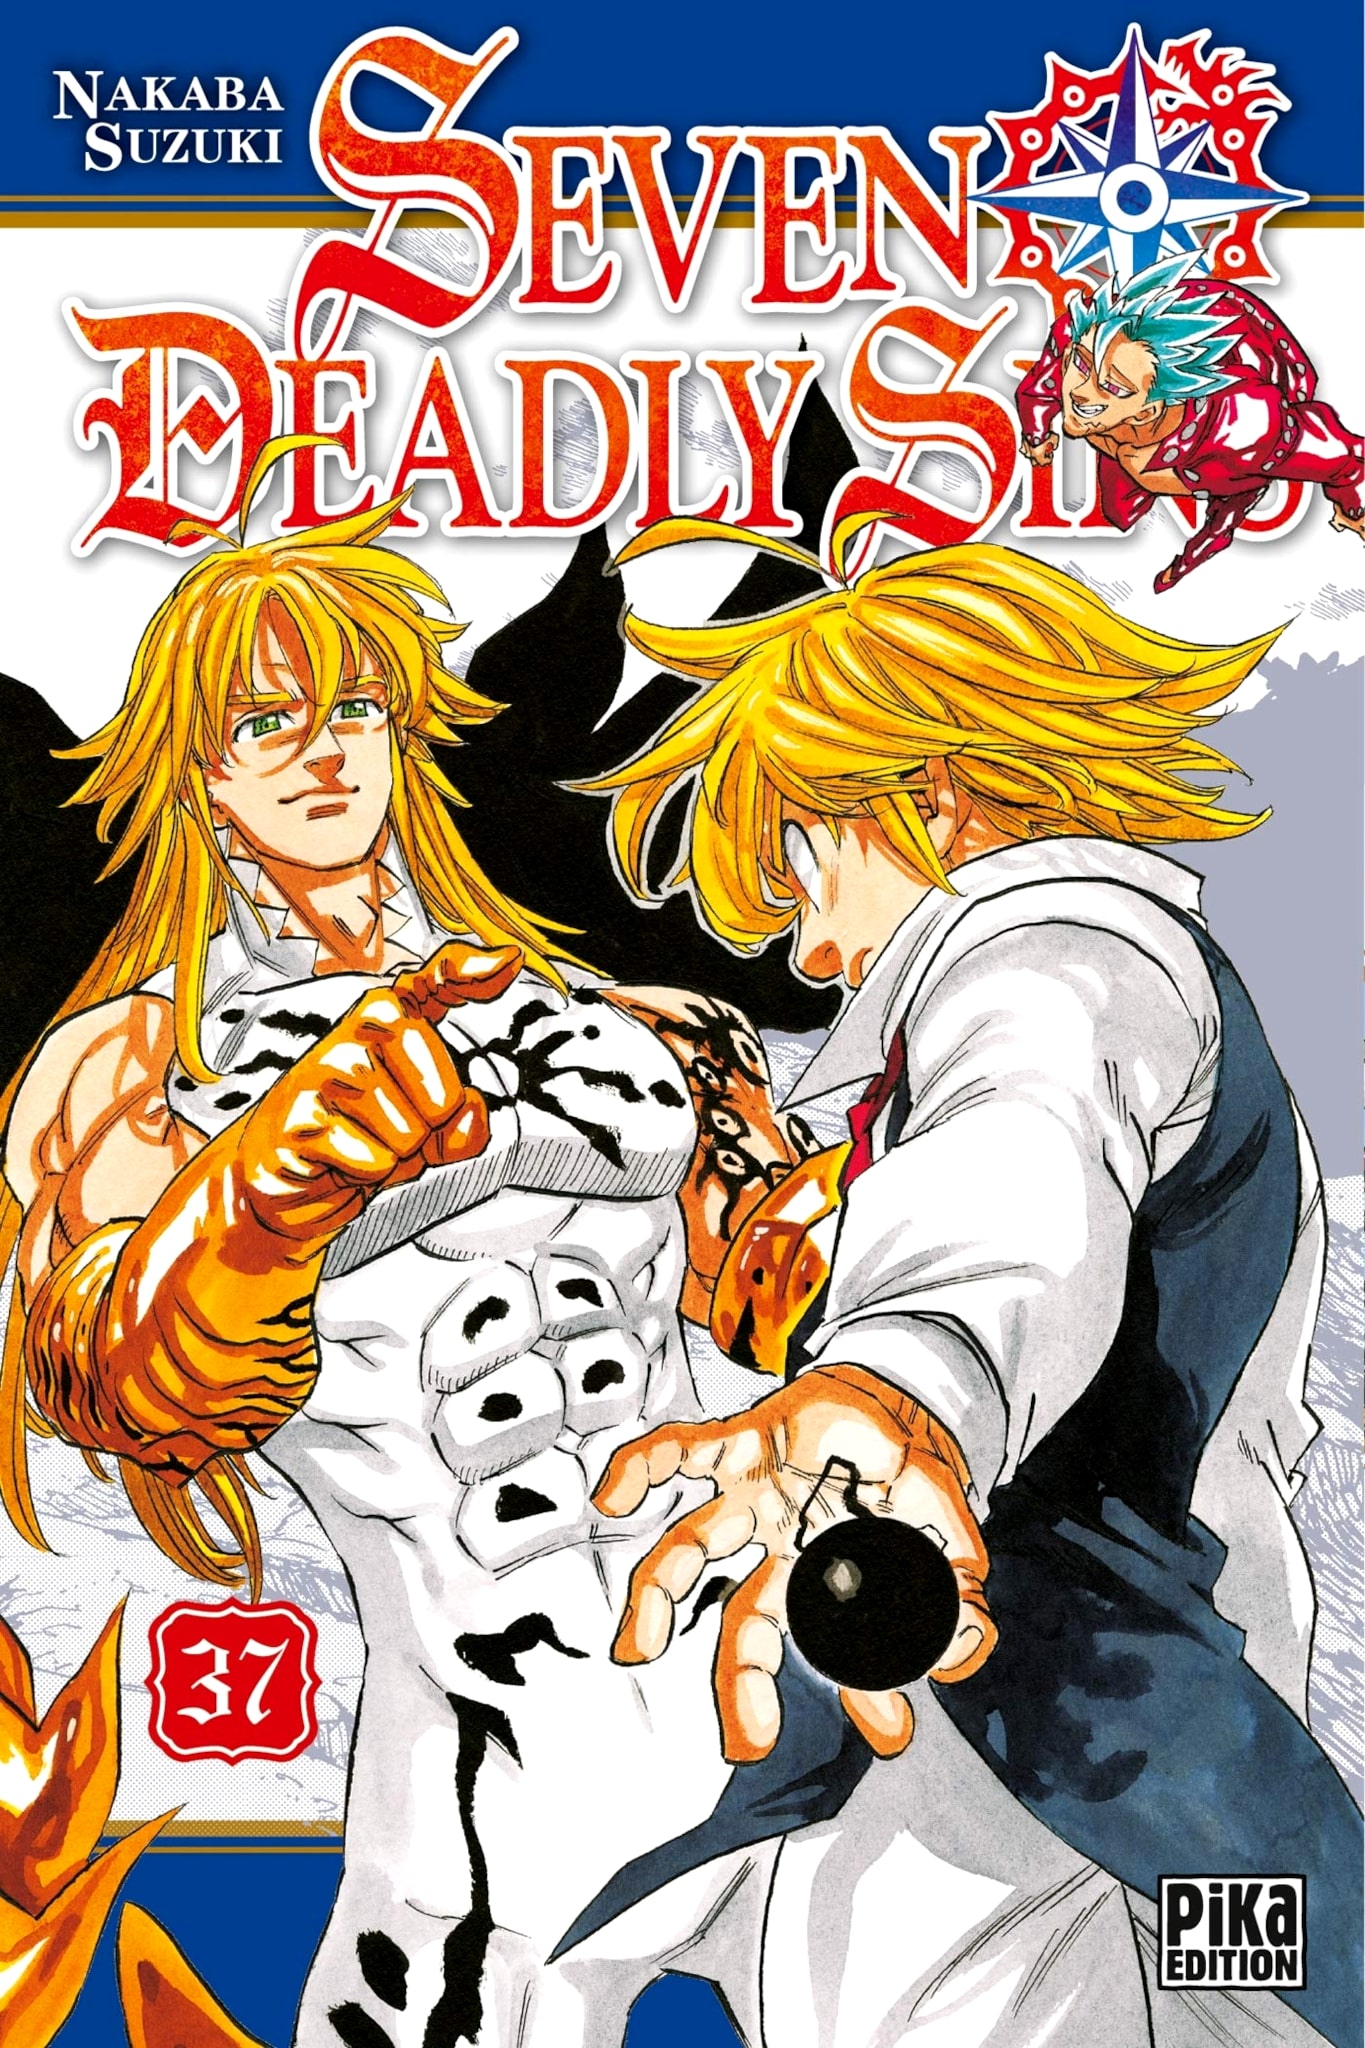 Tome 37 du manga The Seven Deadly Sins